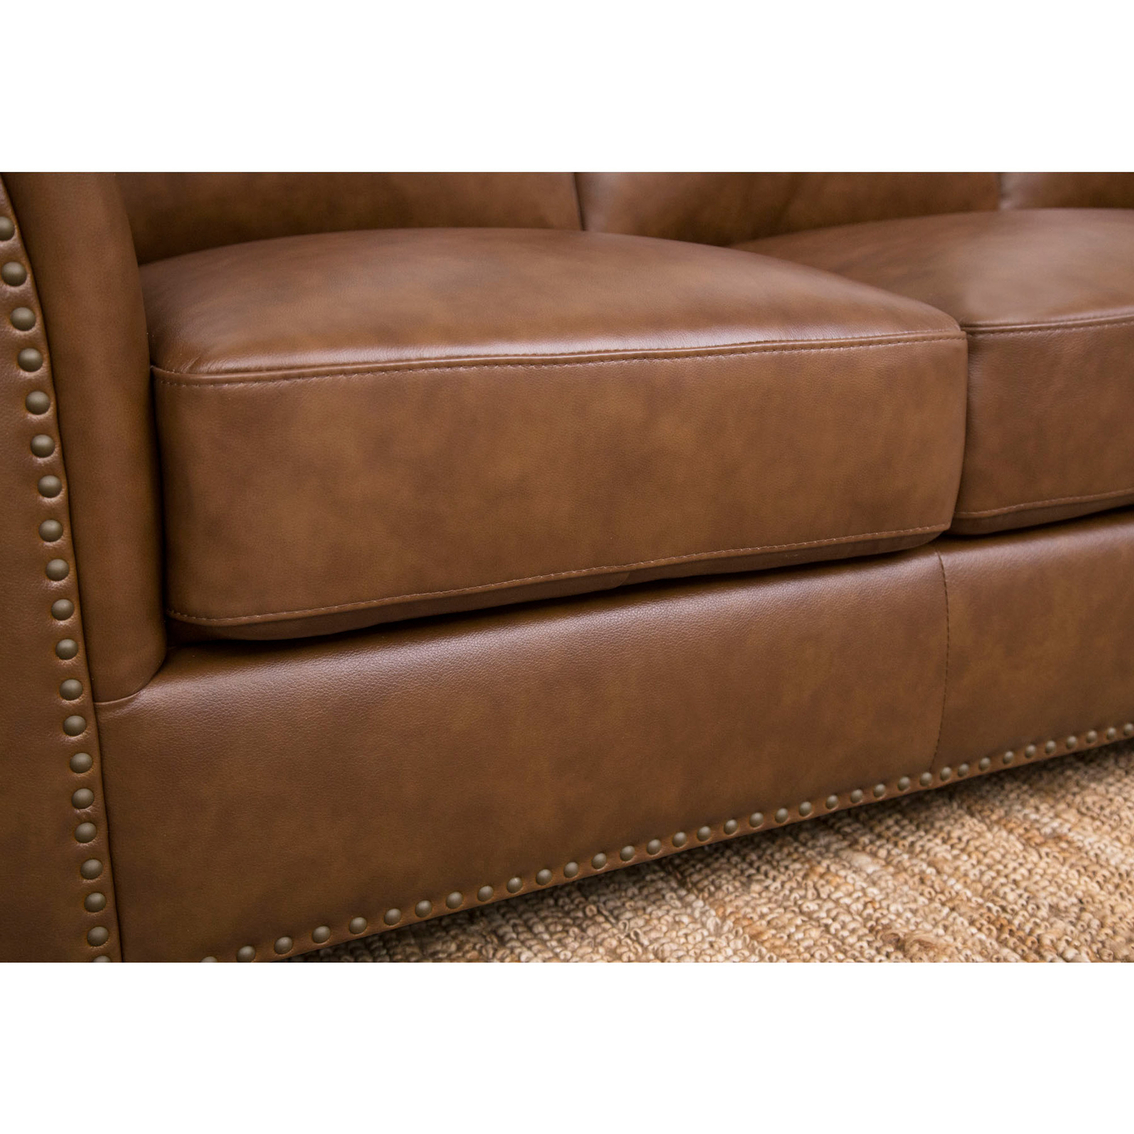 Abbyson Tuscany Leather Sofa - Image 5 of 5